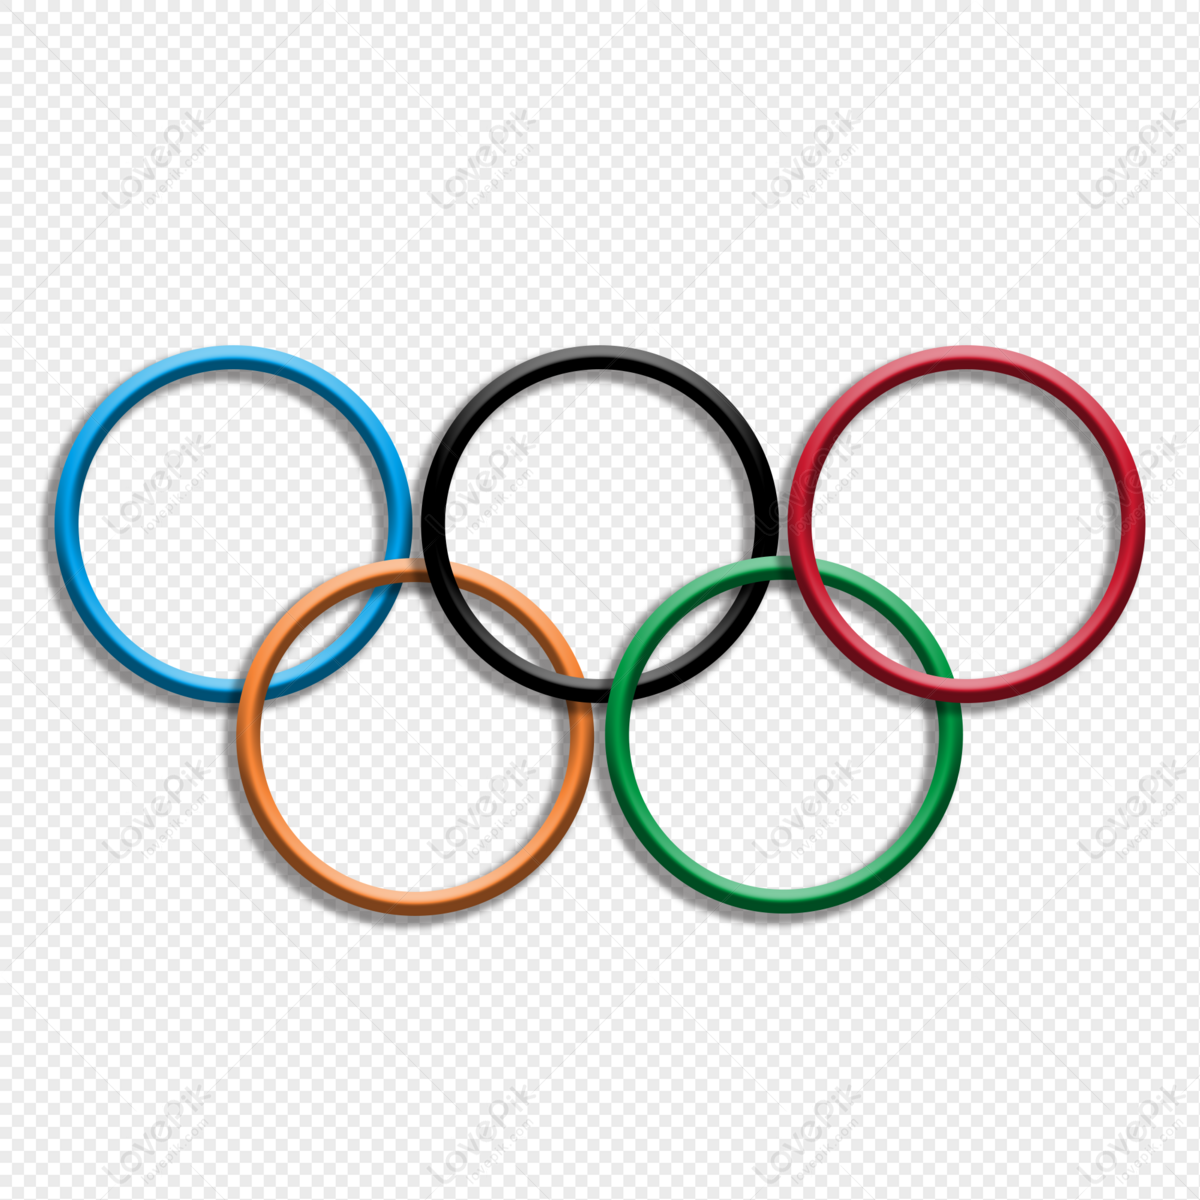 Savitri | 35: The Olympic Rings